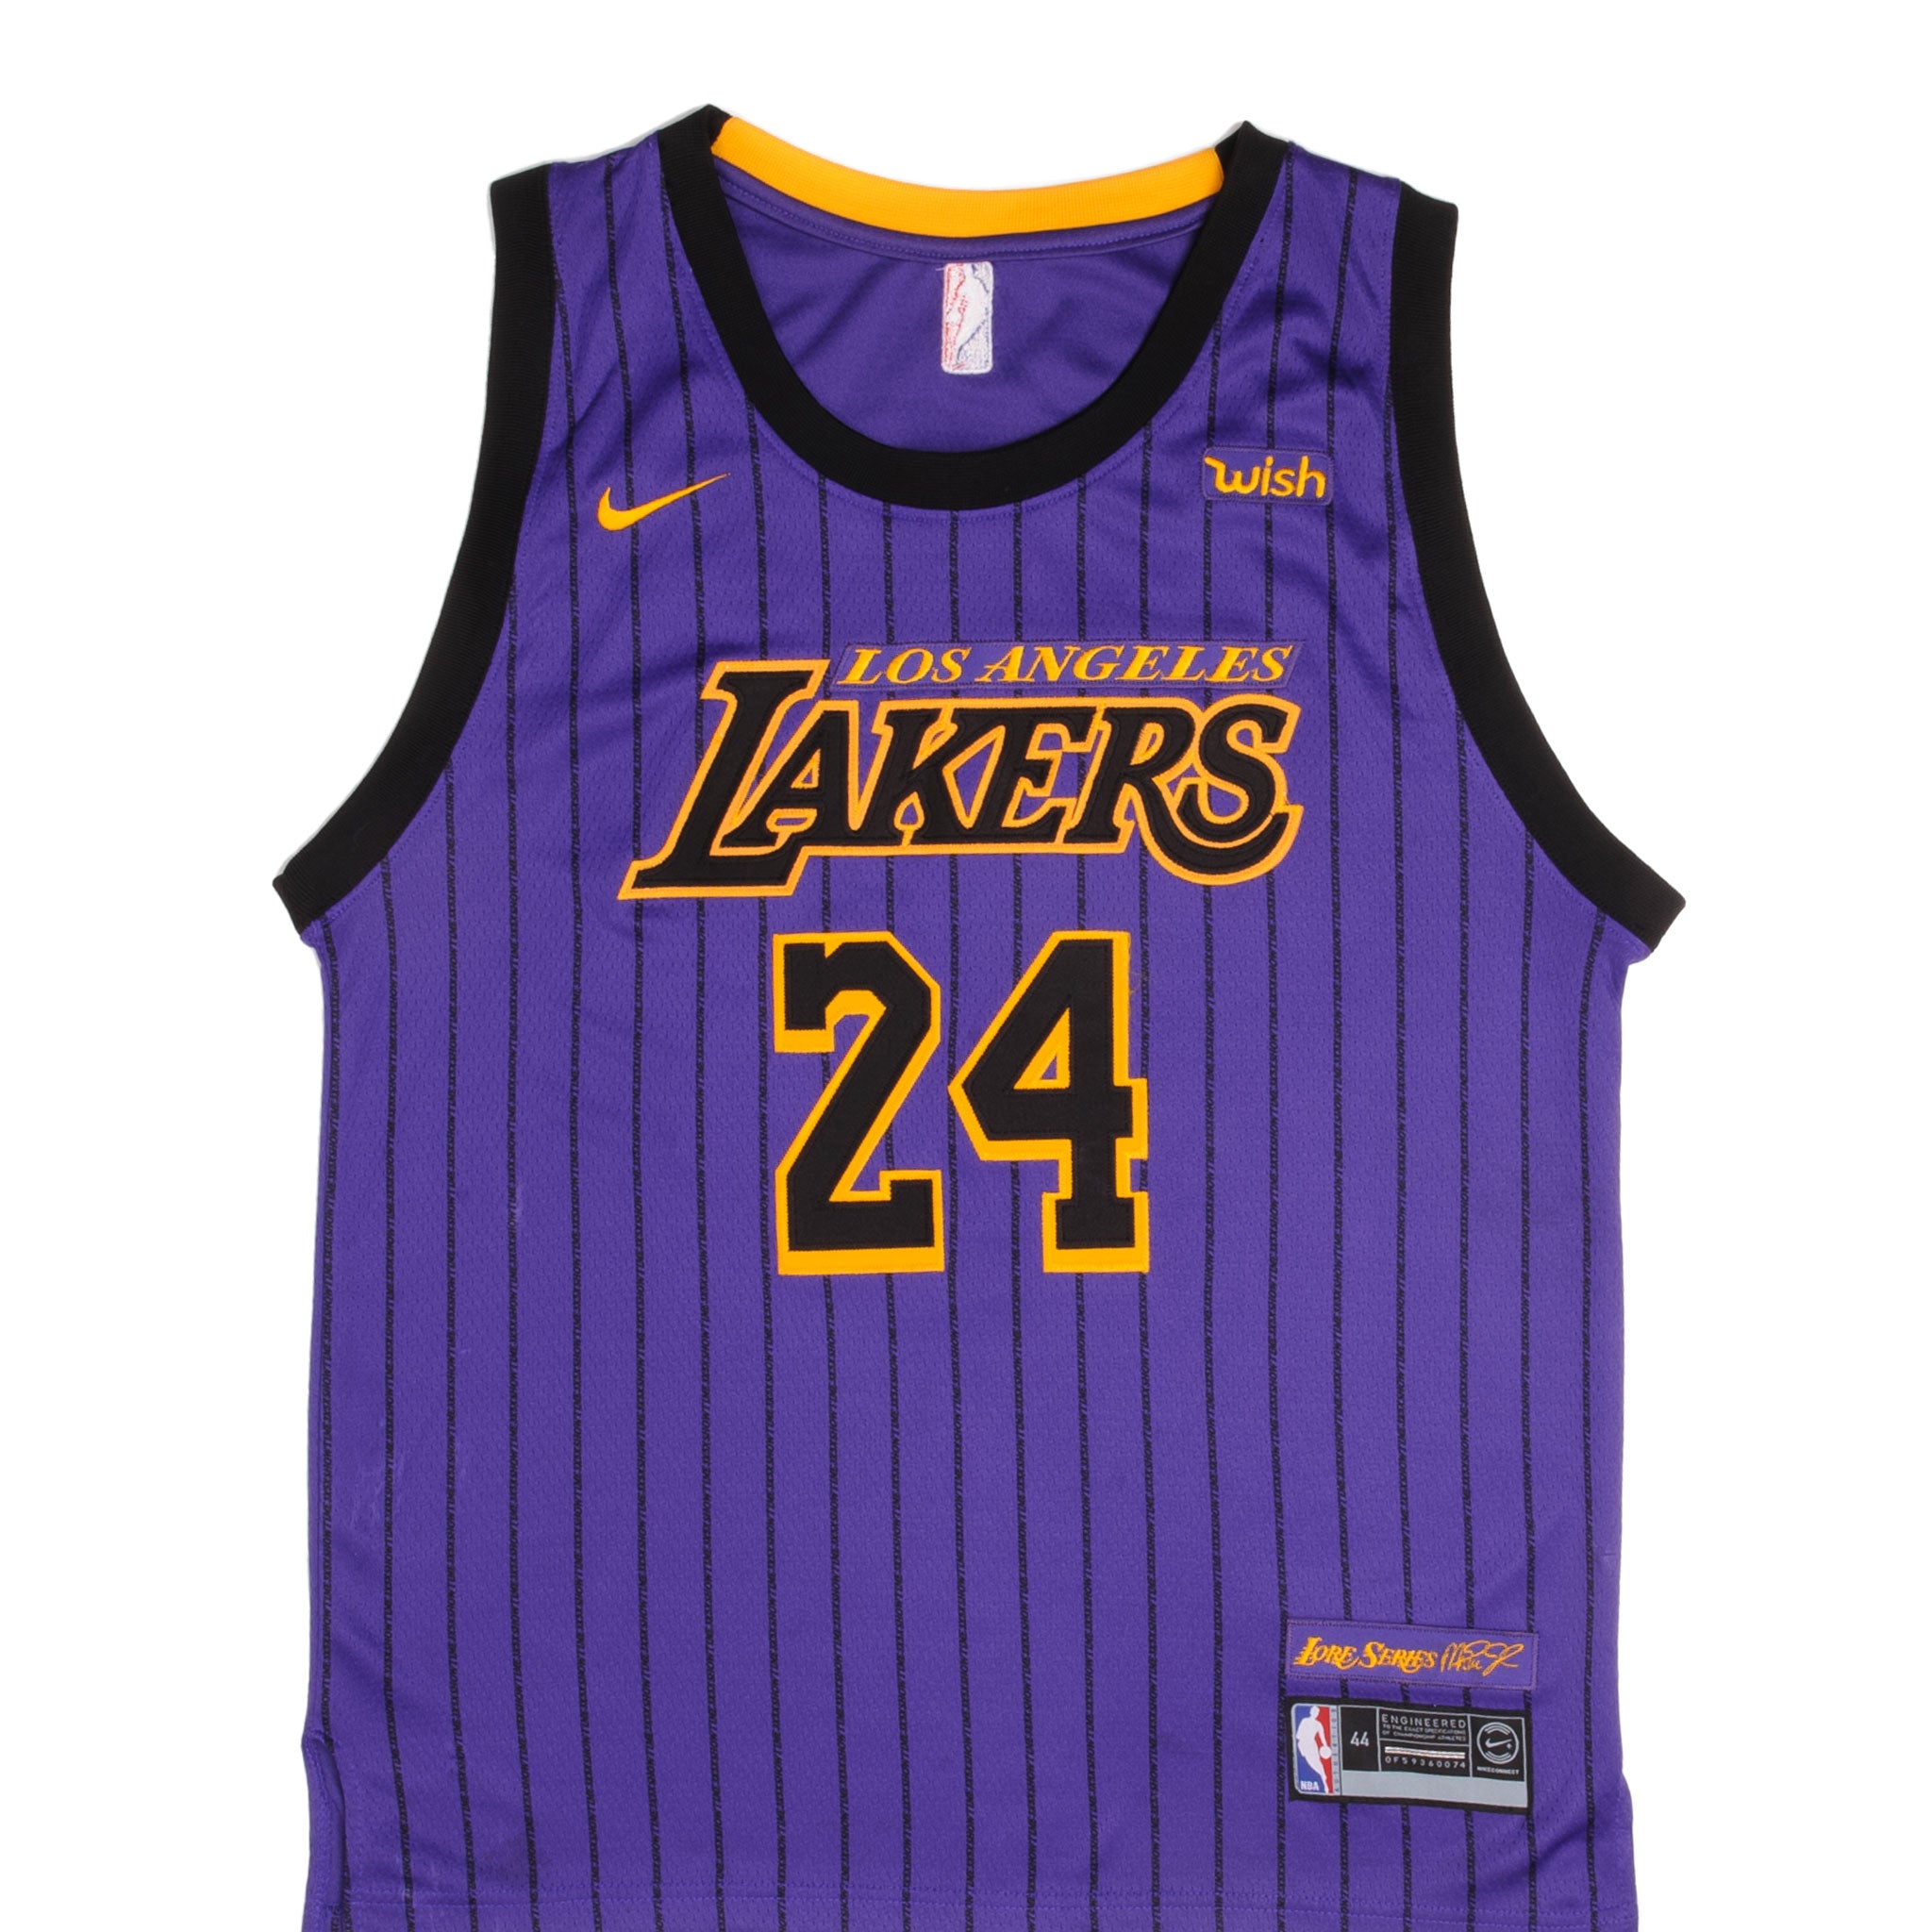 Adidas NBA Los Angeles Lakers Kobe Bryant #24 Jersey Size L.